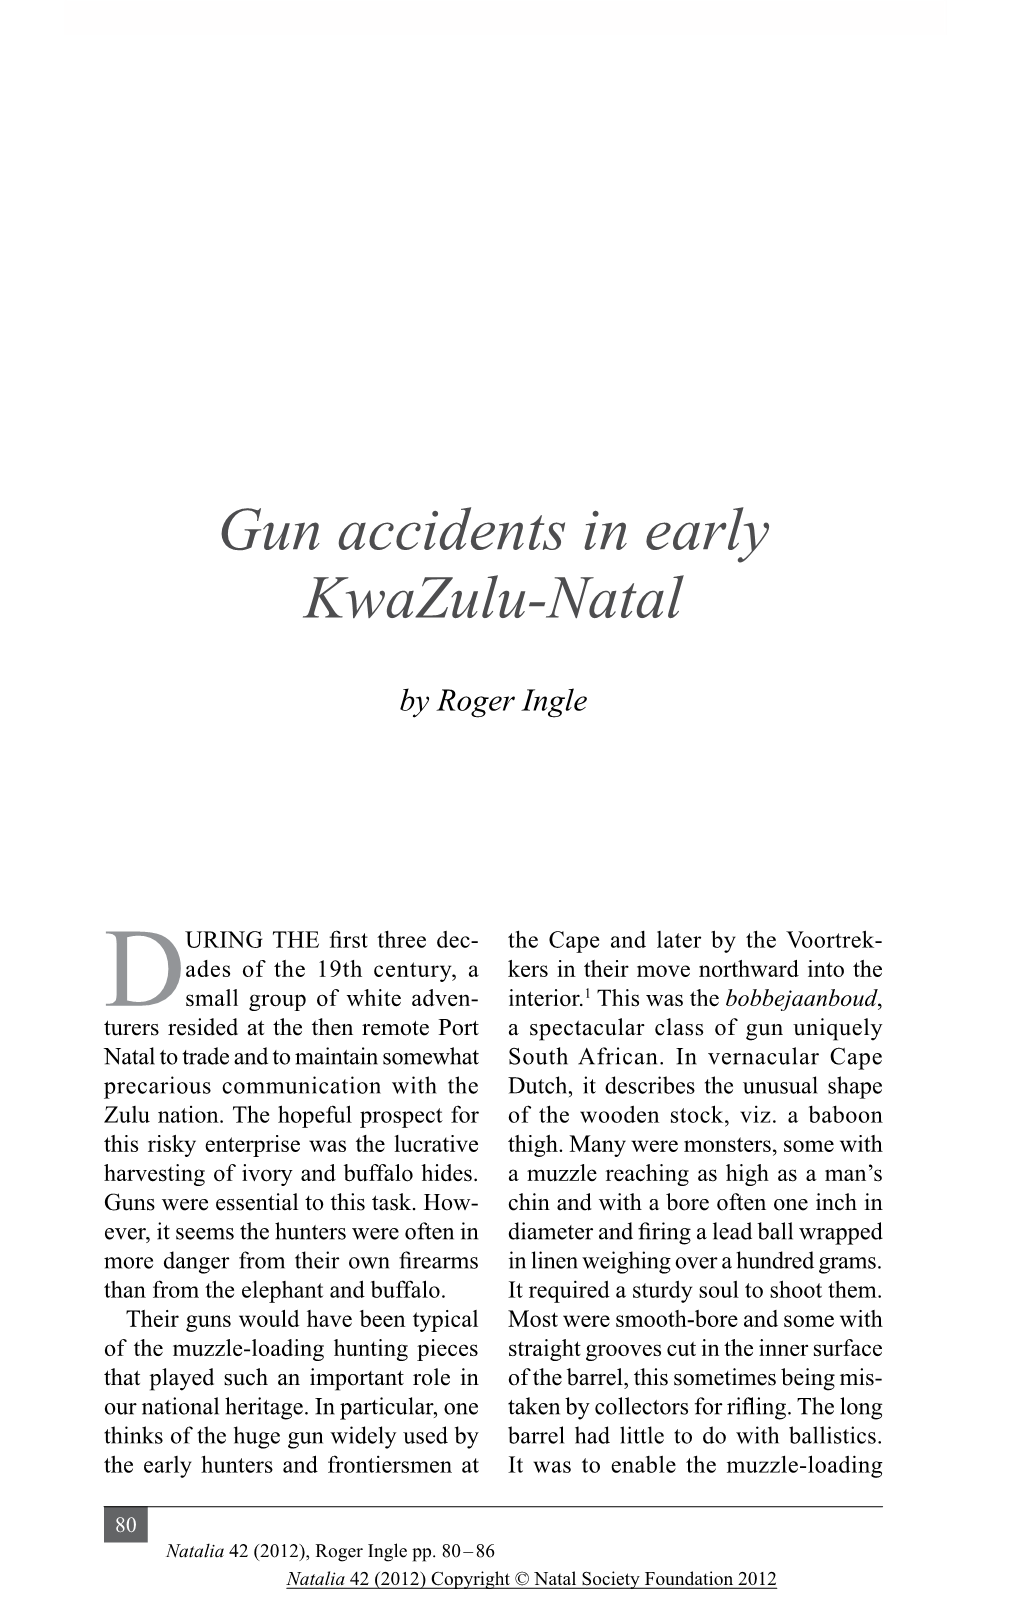 Gun Accidents in Early Kwazulu-Natal Roger Ingle